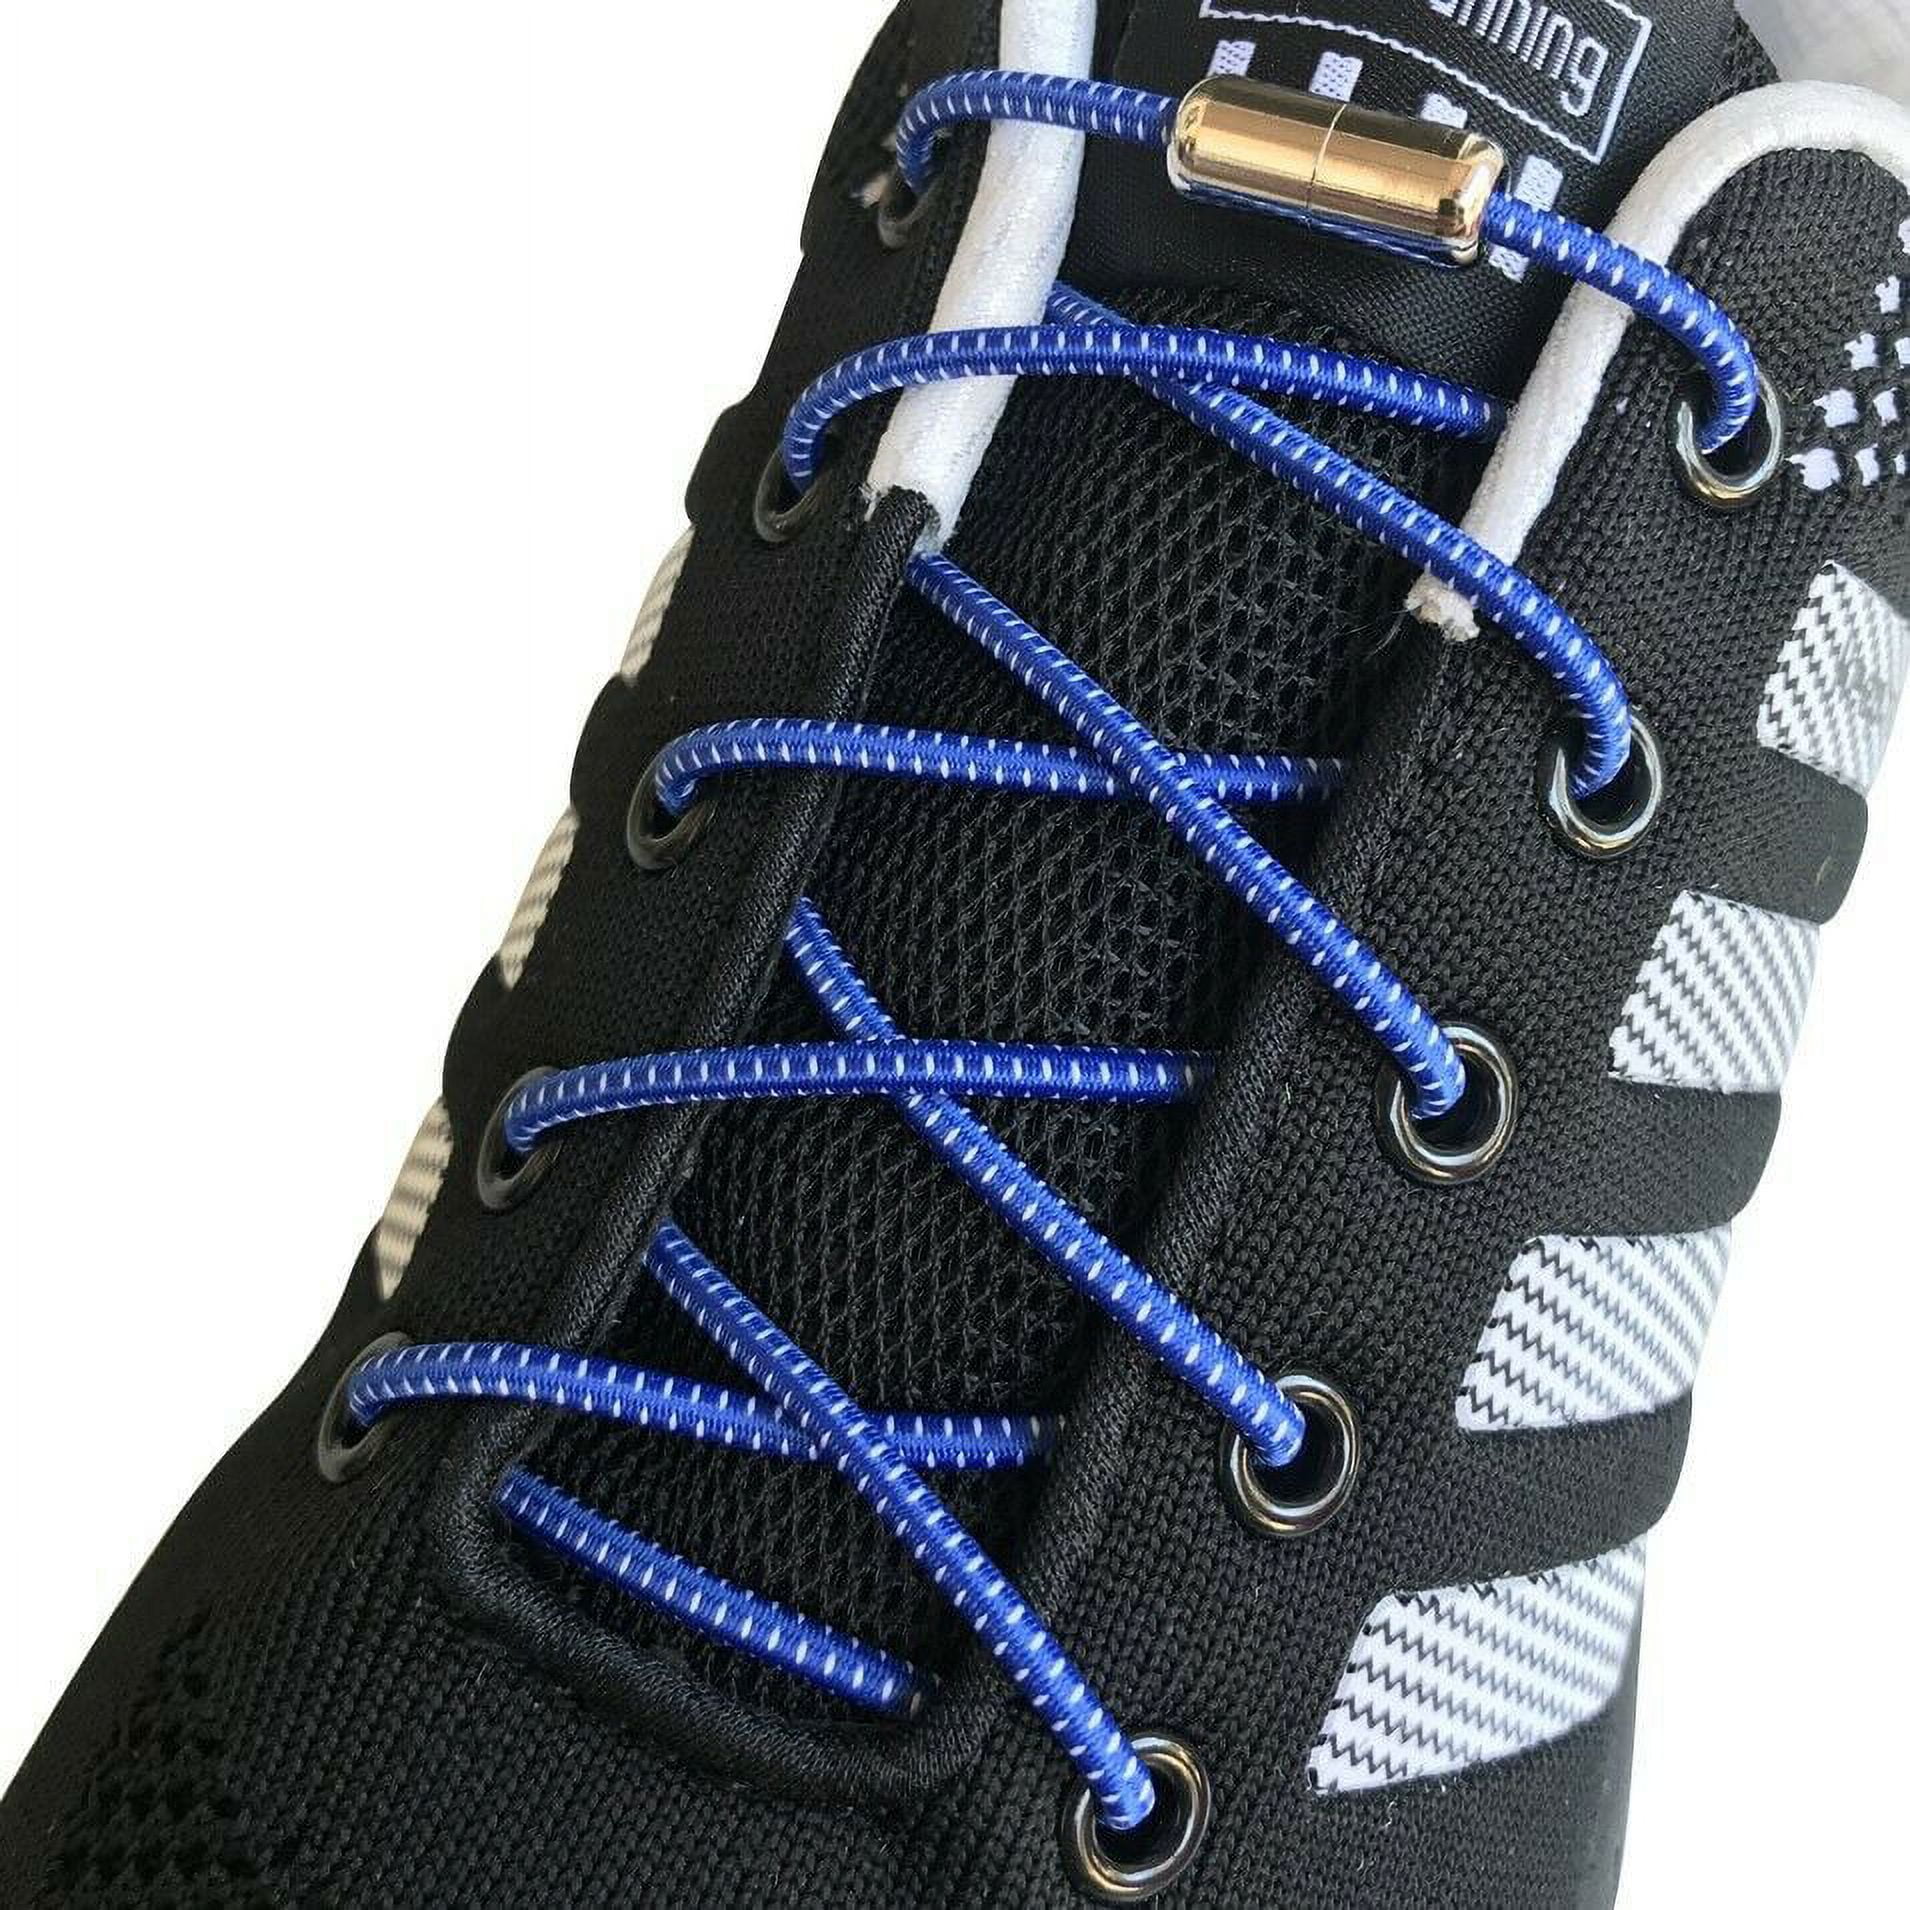 When Should You Use Elastic Shoelaces? – Triathlete